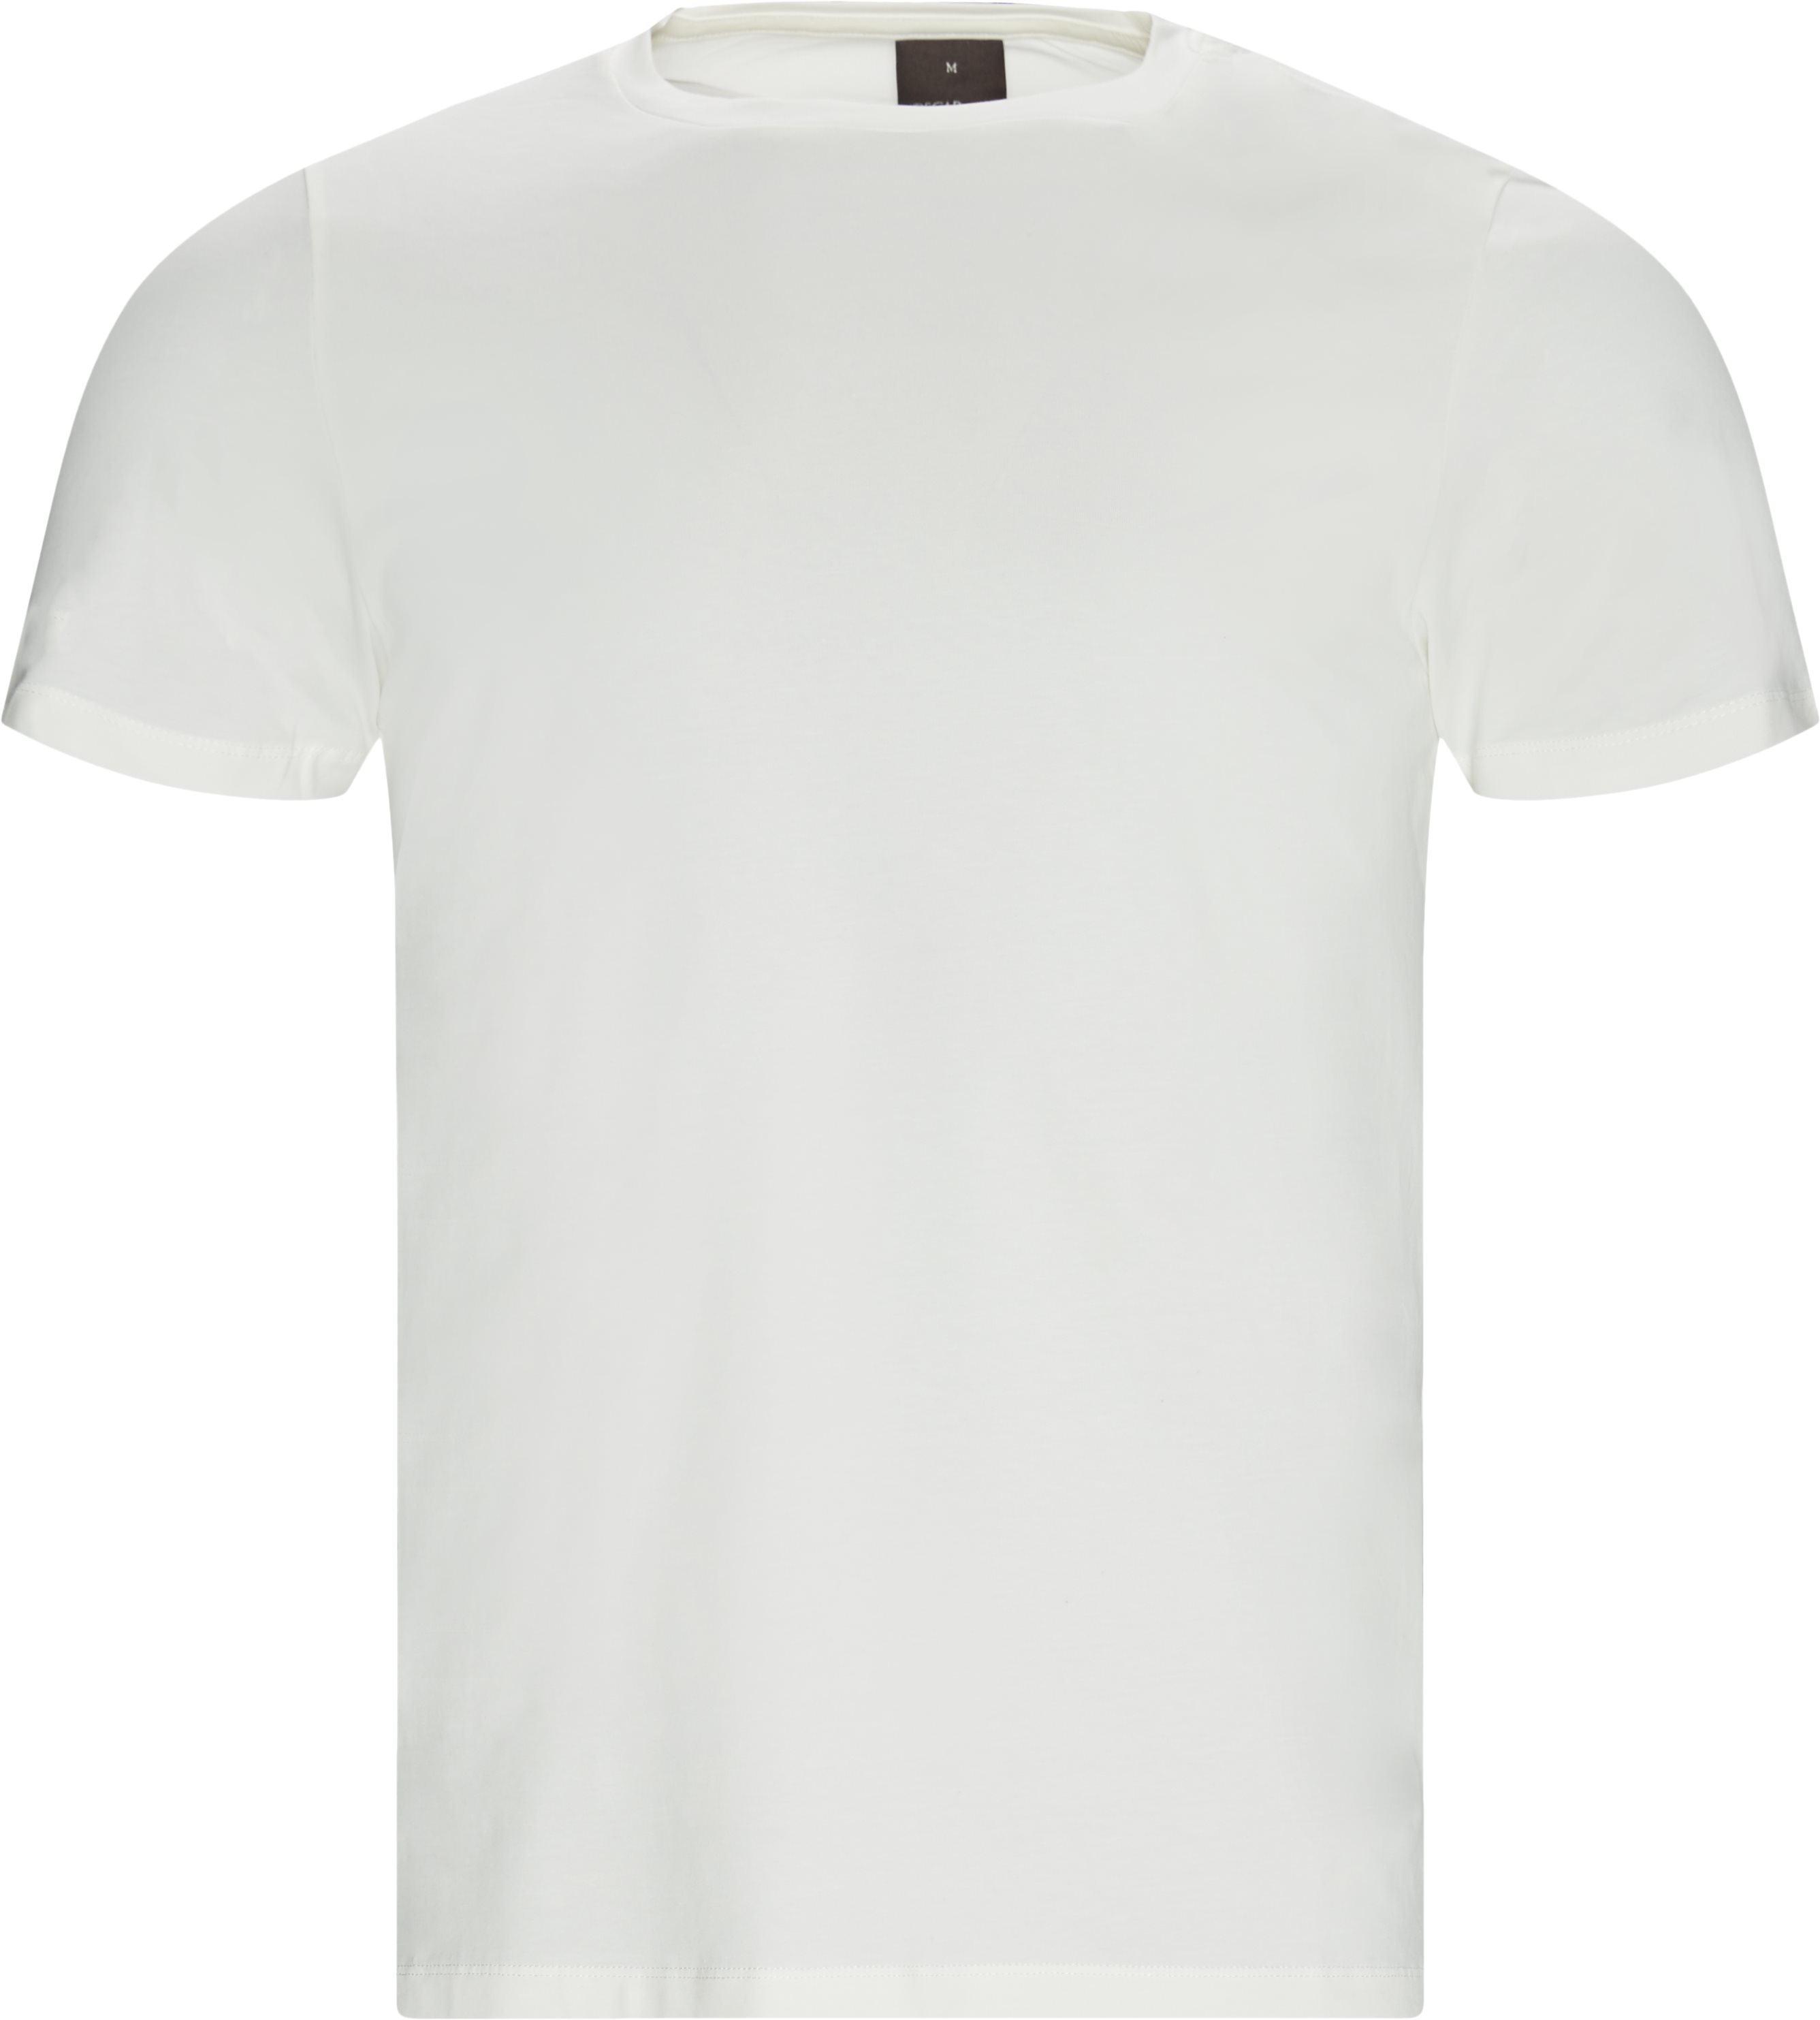 Kyran T-shirt - T-shirts - Regular fit - White